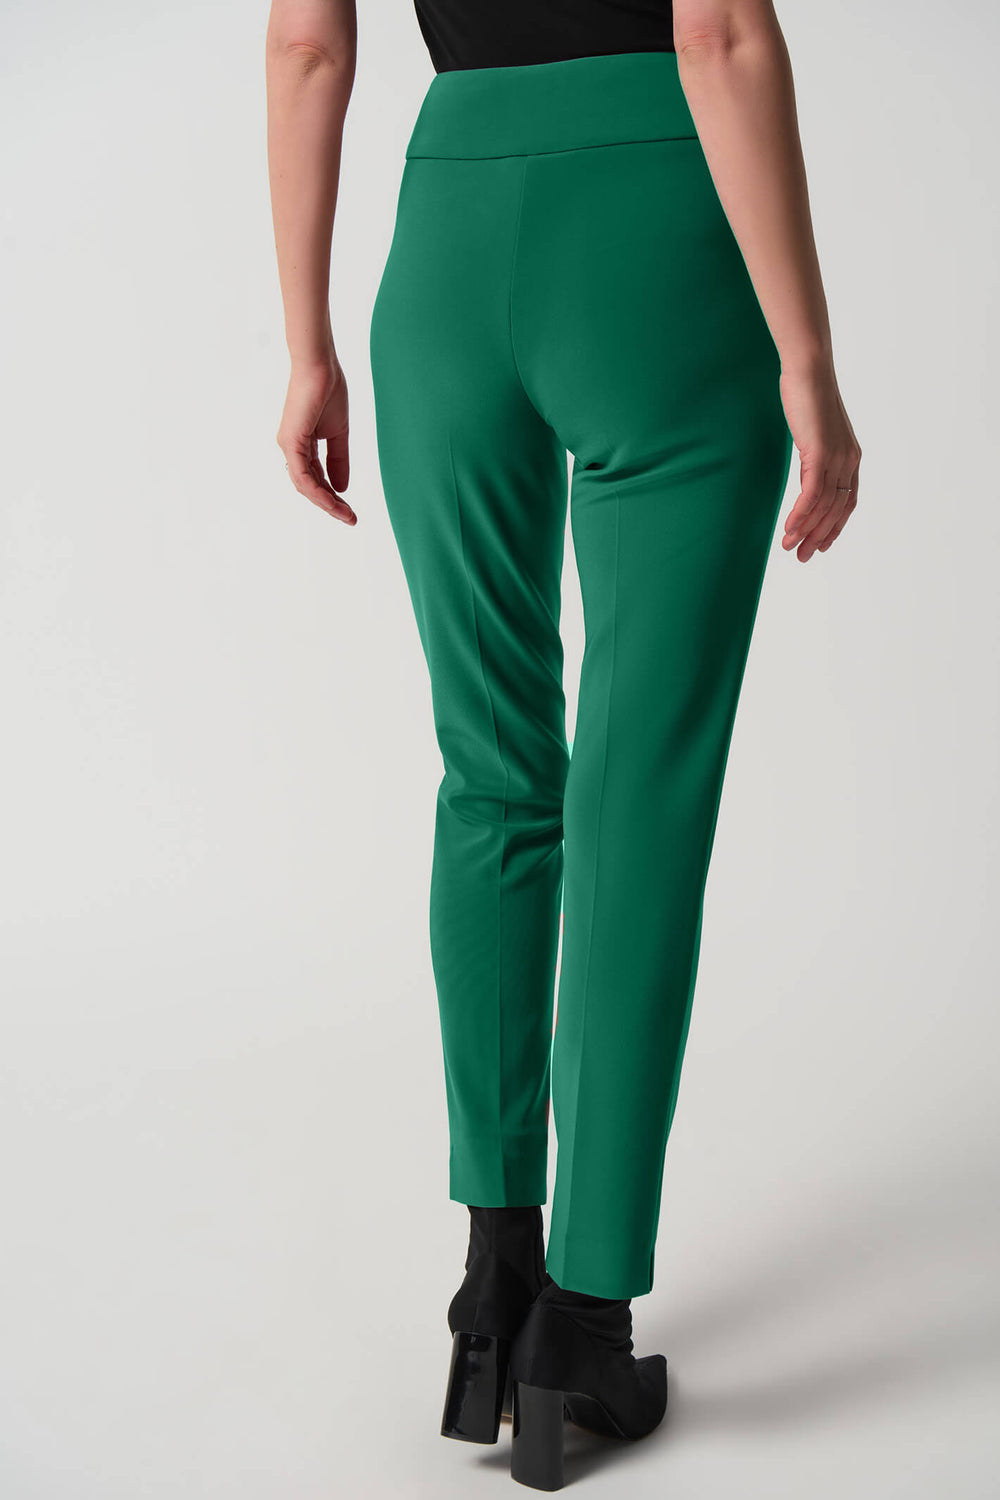 Joseph Ribkoff 144092TT Kelly Green Slim Leg Pull-On Trousers - Experience Boutique